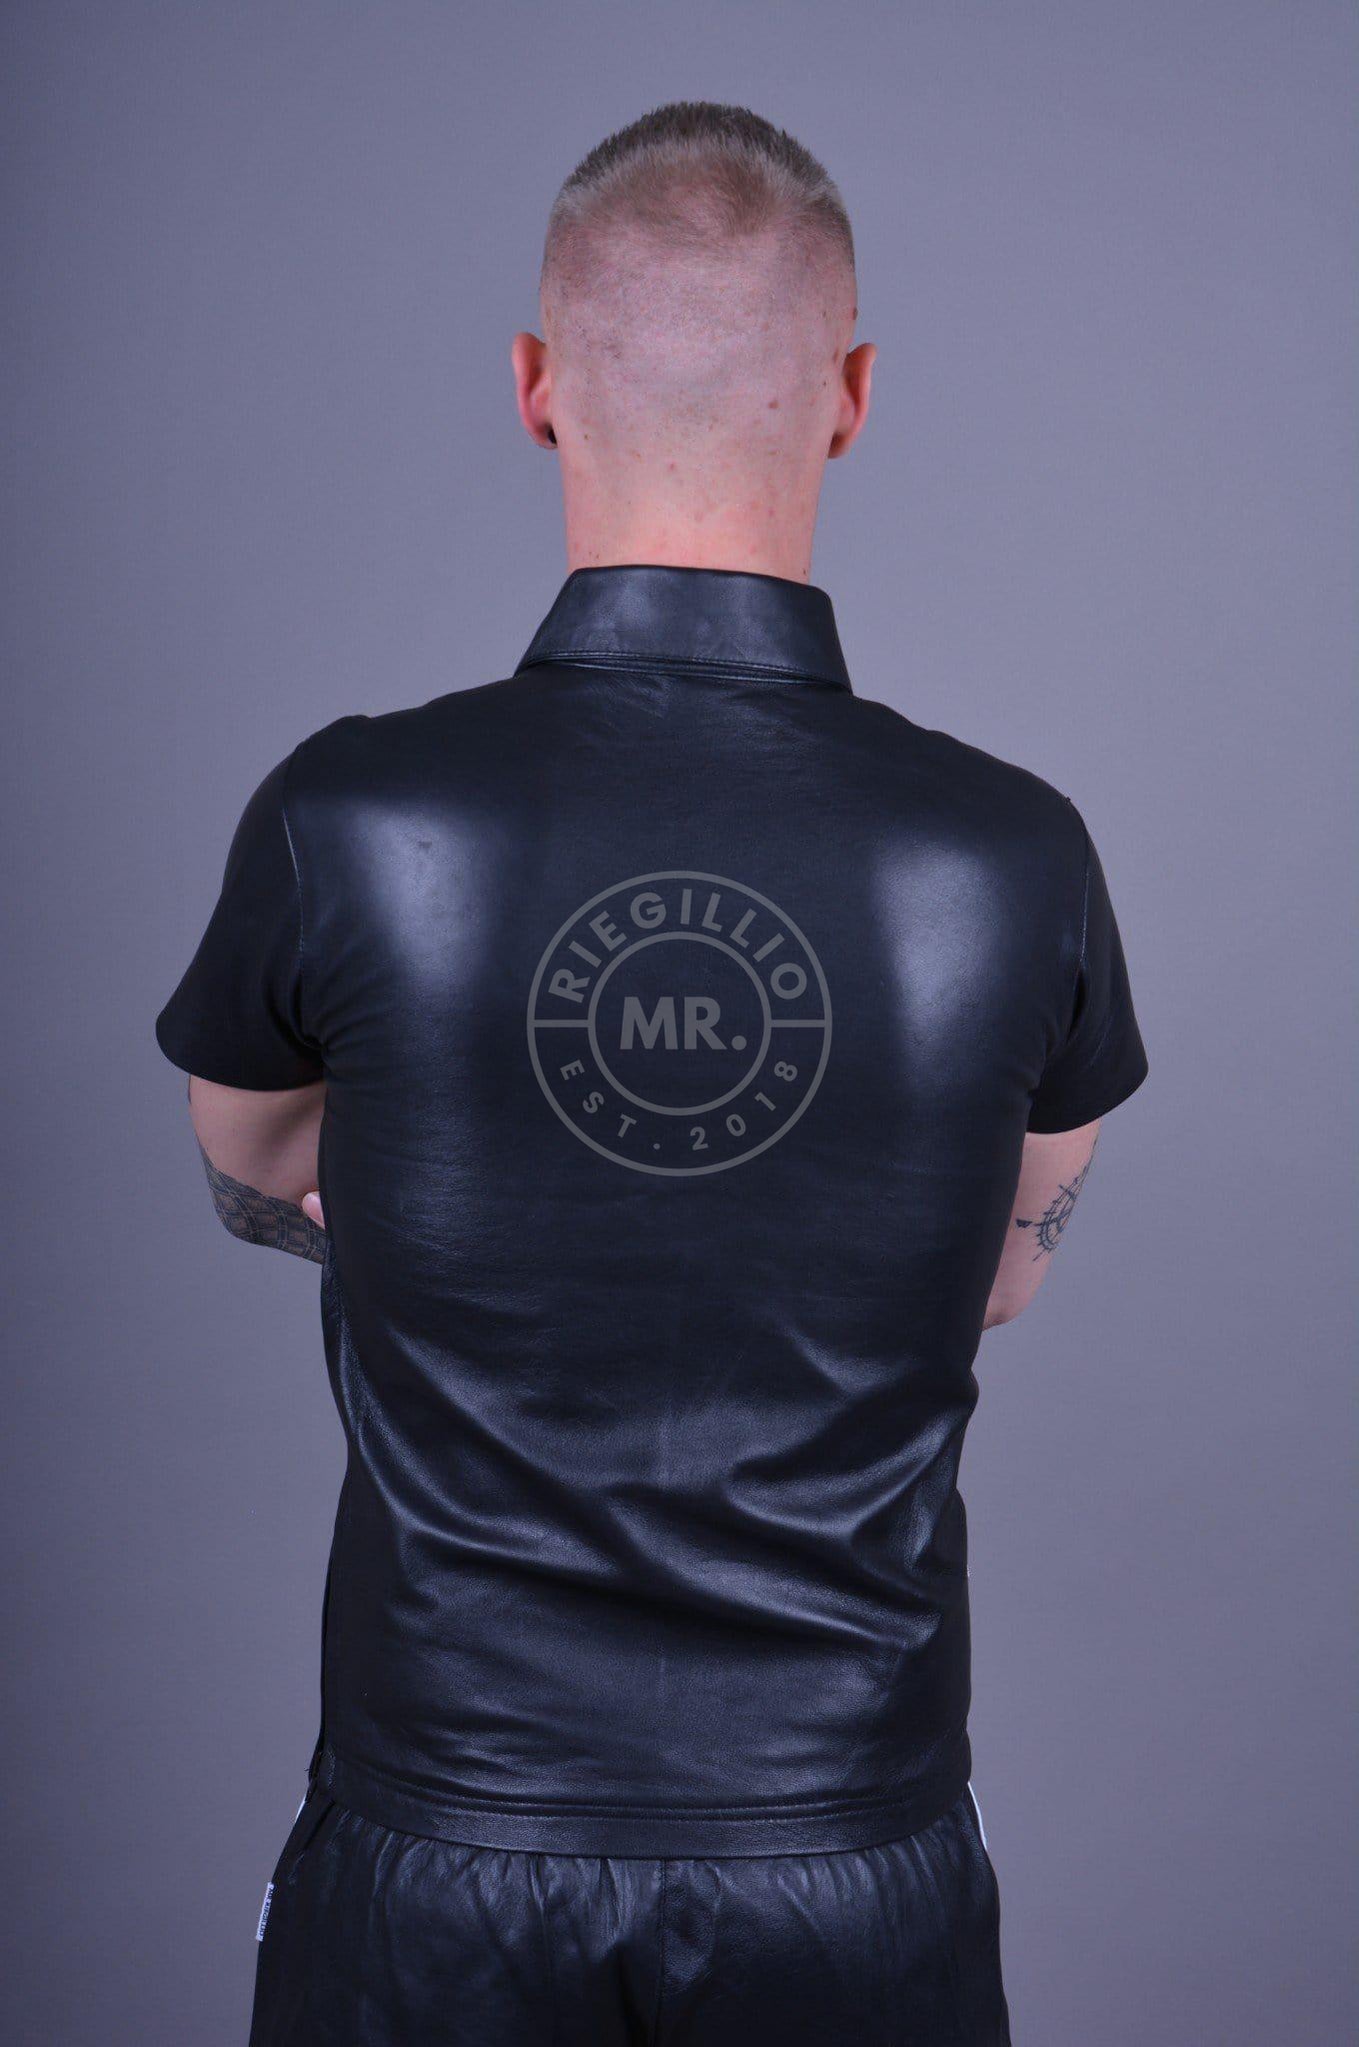 Black Leather Polo - PLAIN BLACK at MR. Riegillio